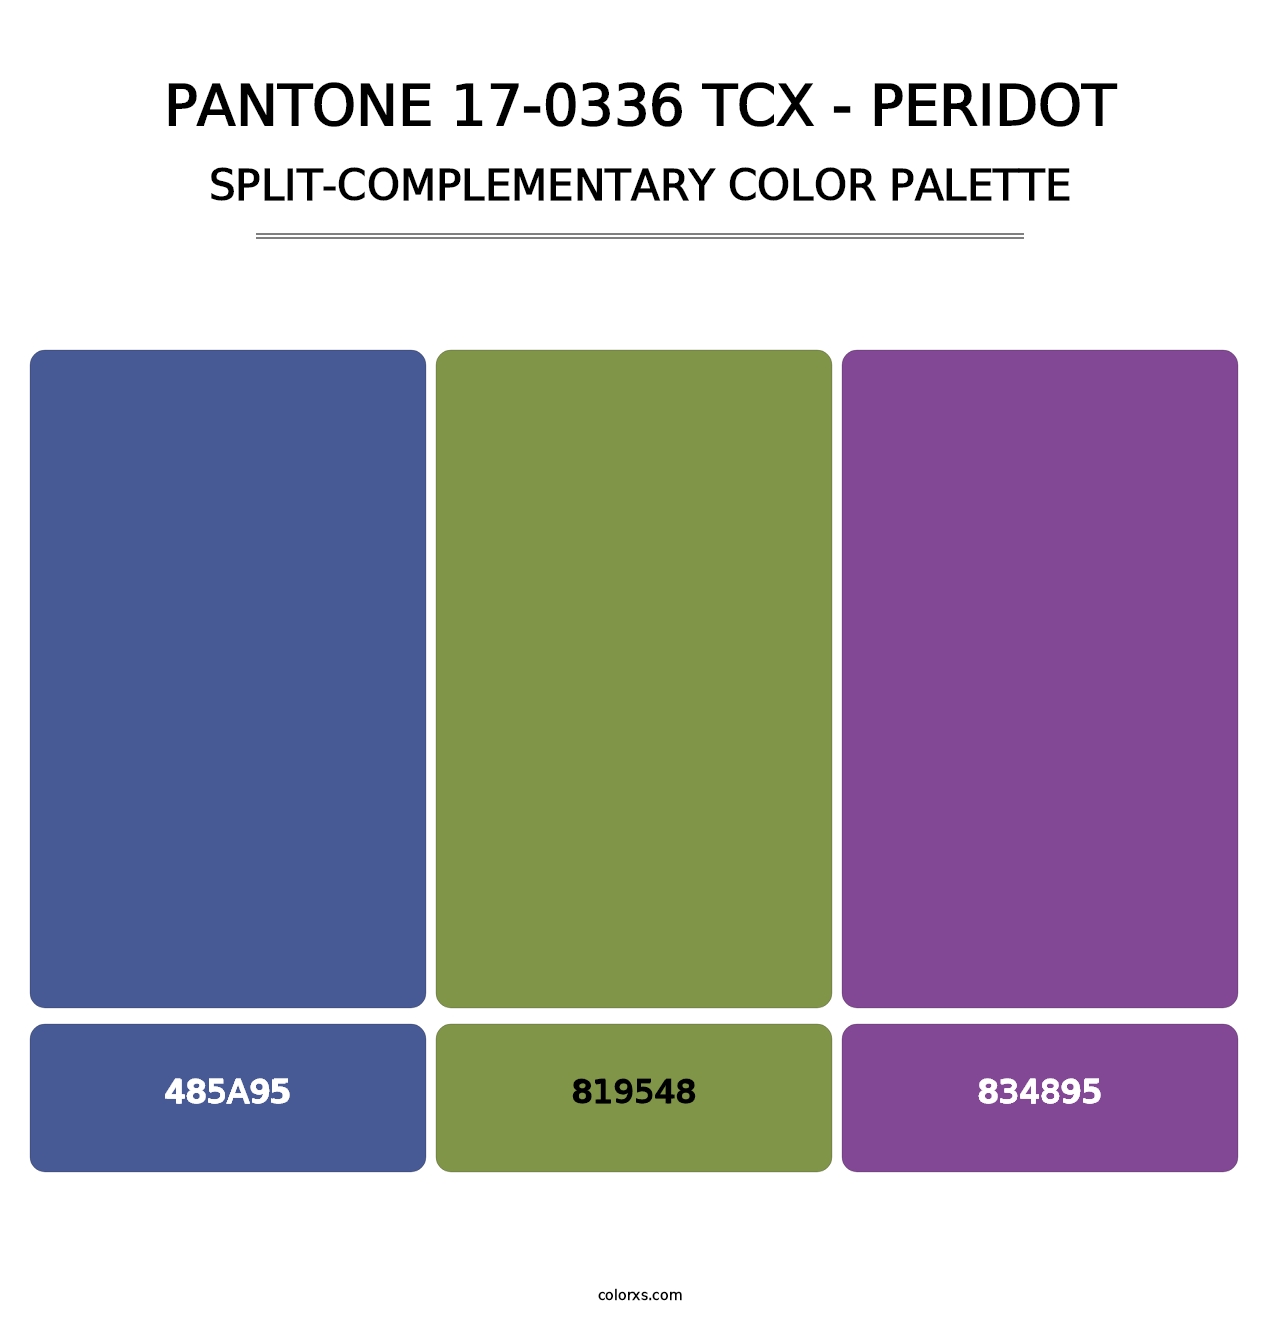 PANTONE 17-0336 TCX - Peridot - Split-Complementary Color Palette